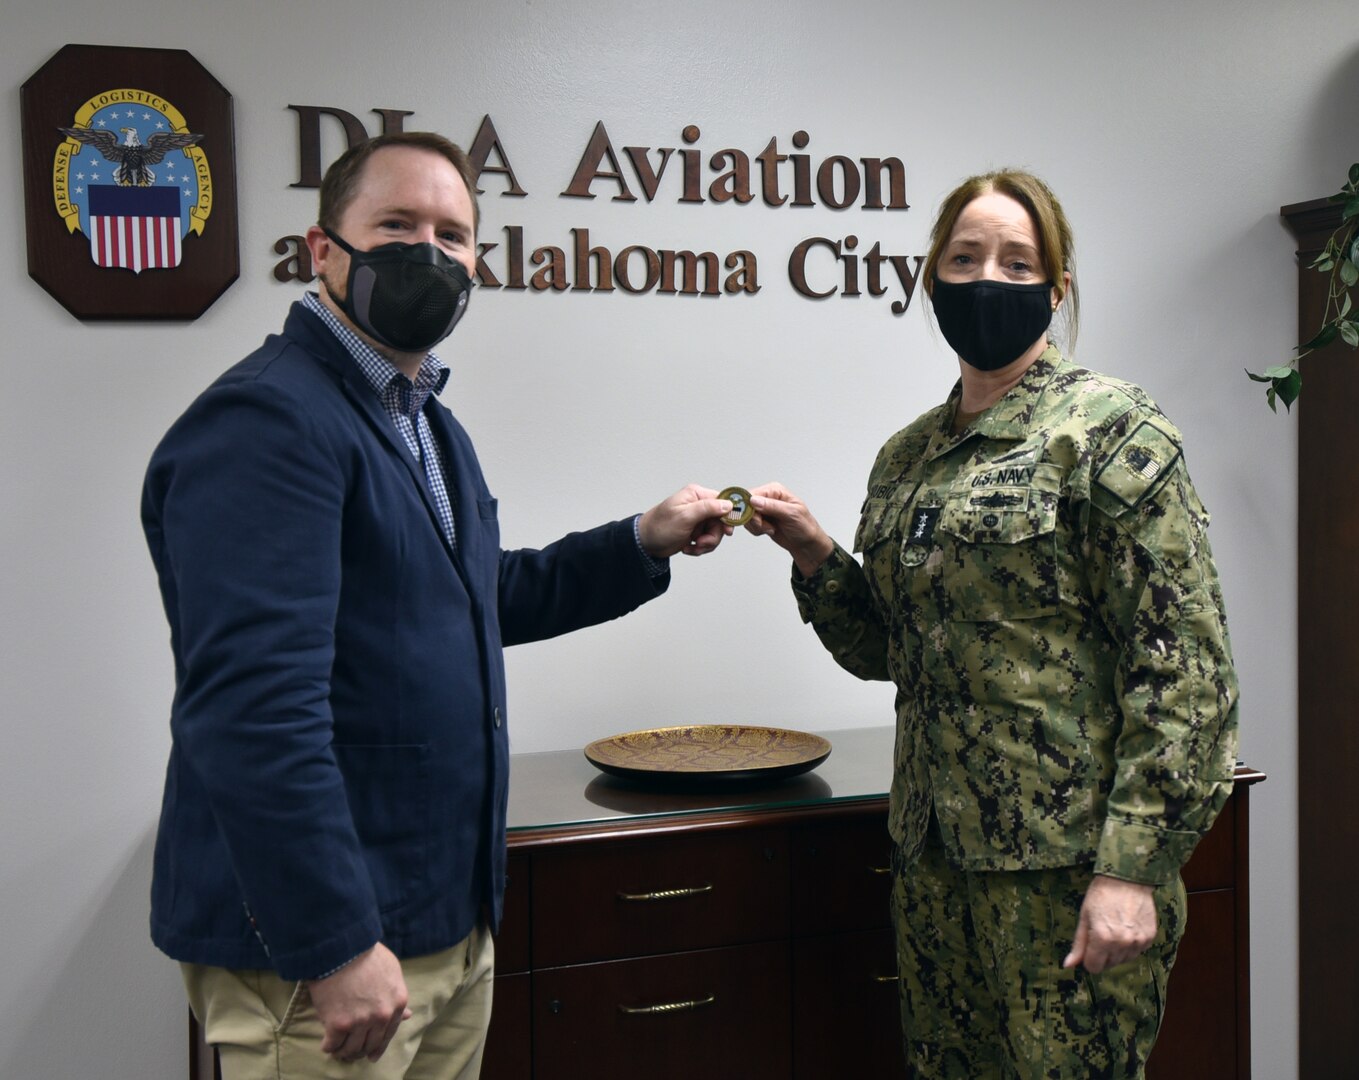 Director visits DLA Aviation at OKC